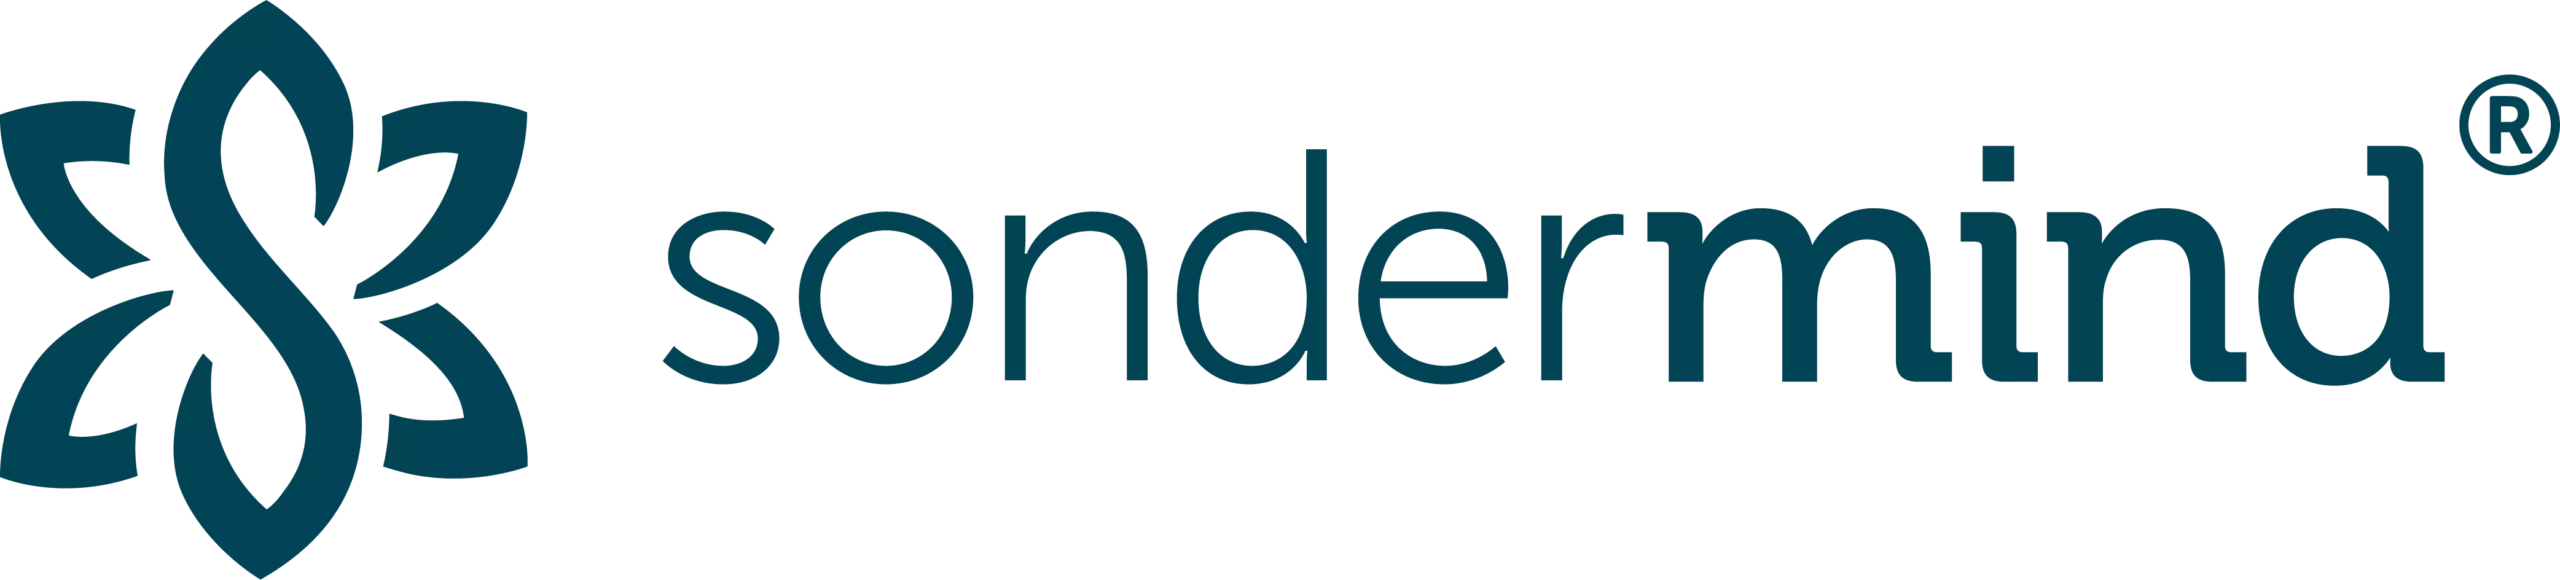 Sondermind Logo